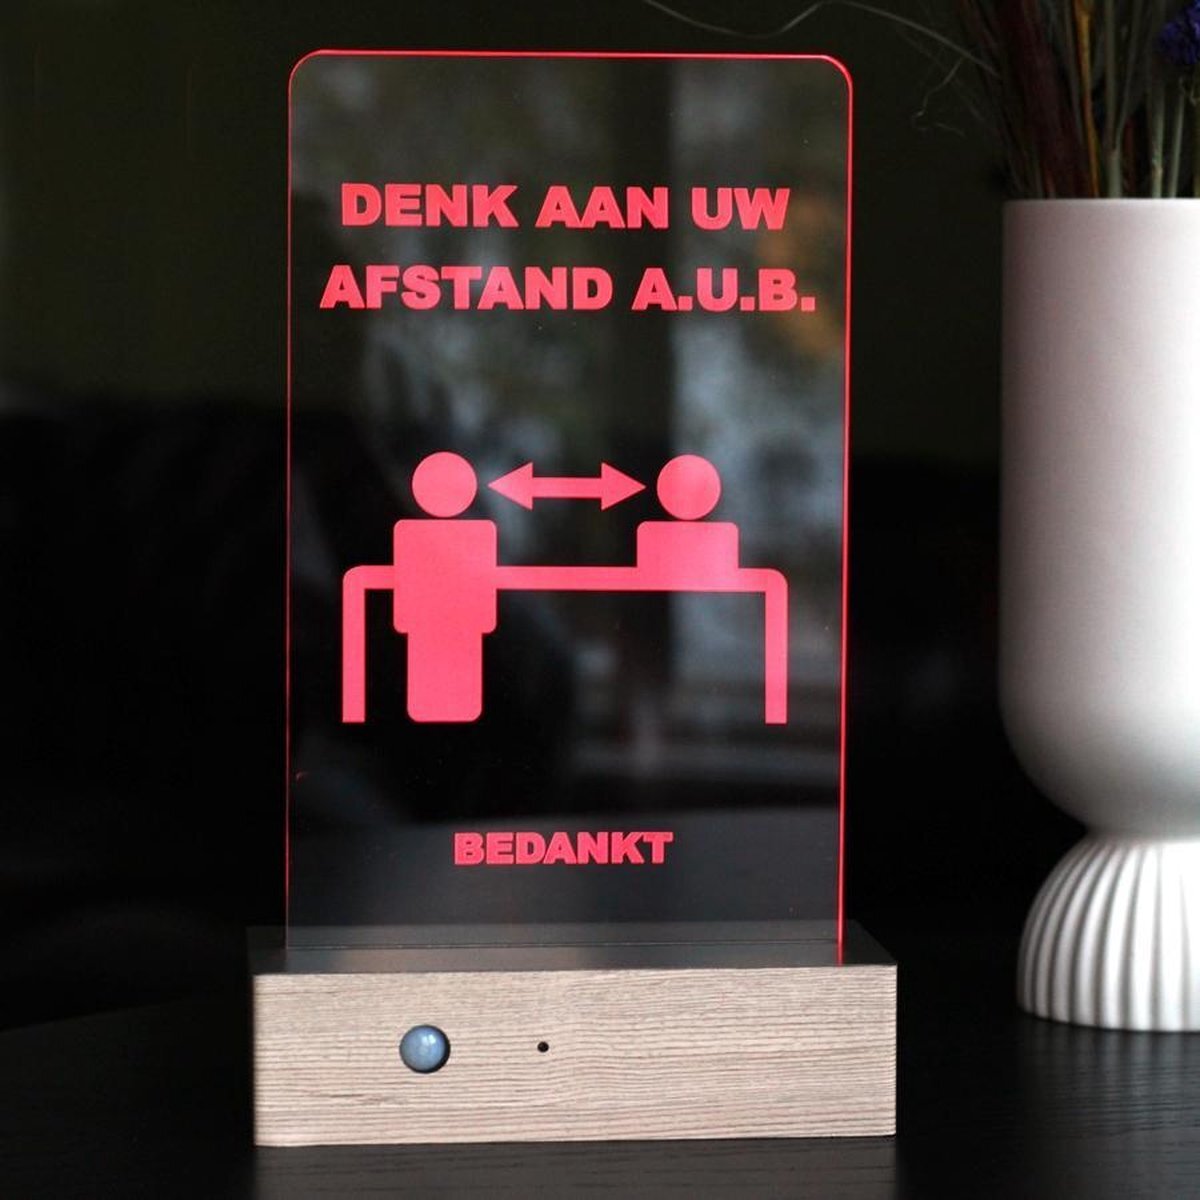 Care-control.nl Safe Distance Desk Stand (Corona / COVID-19), slimme afstandsmeter met LED en geluidssignaal, natuurhout motief